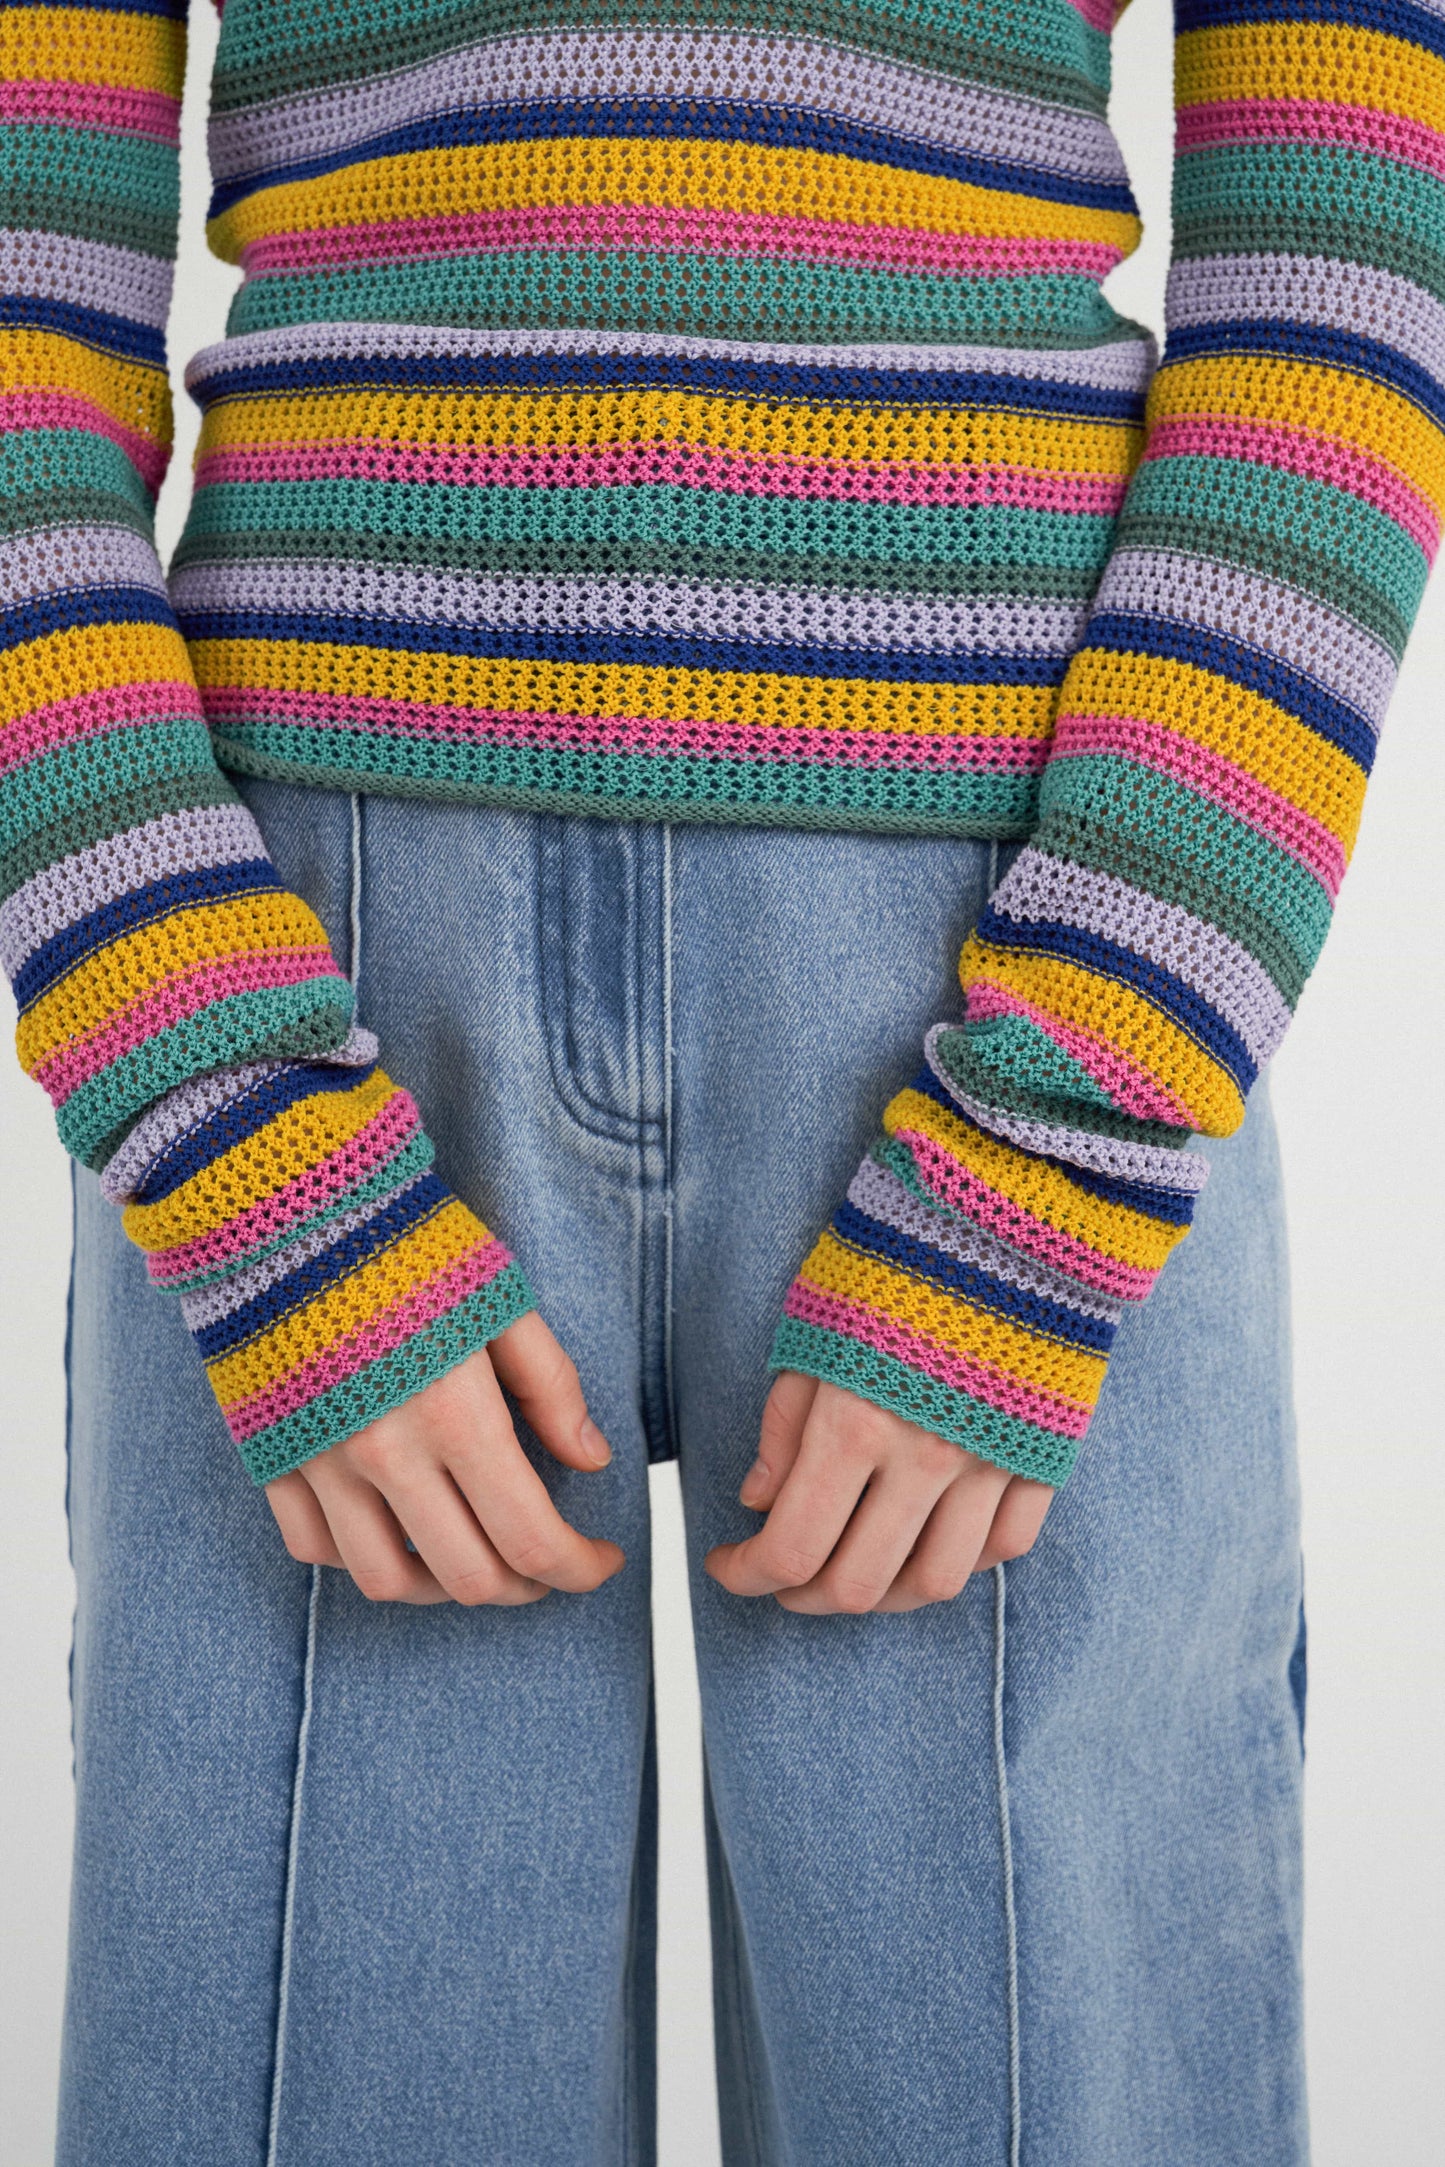 Rainbow Striped Knit Top in Cotton Yarn